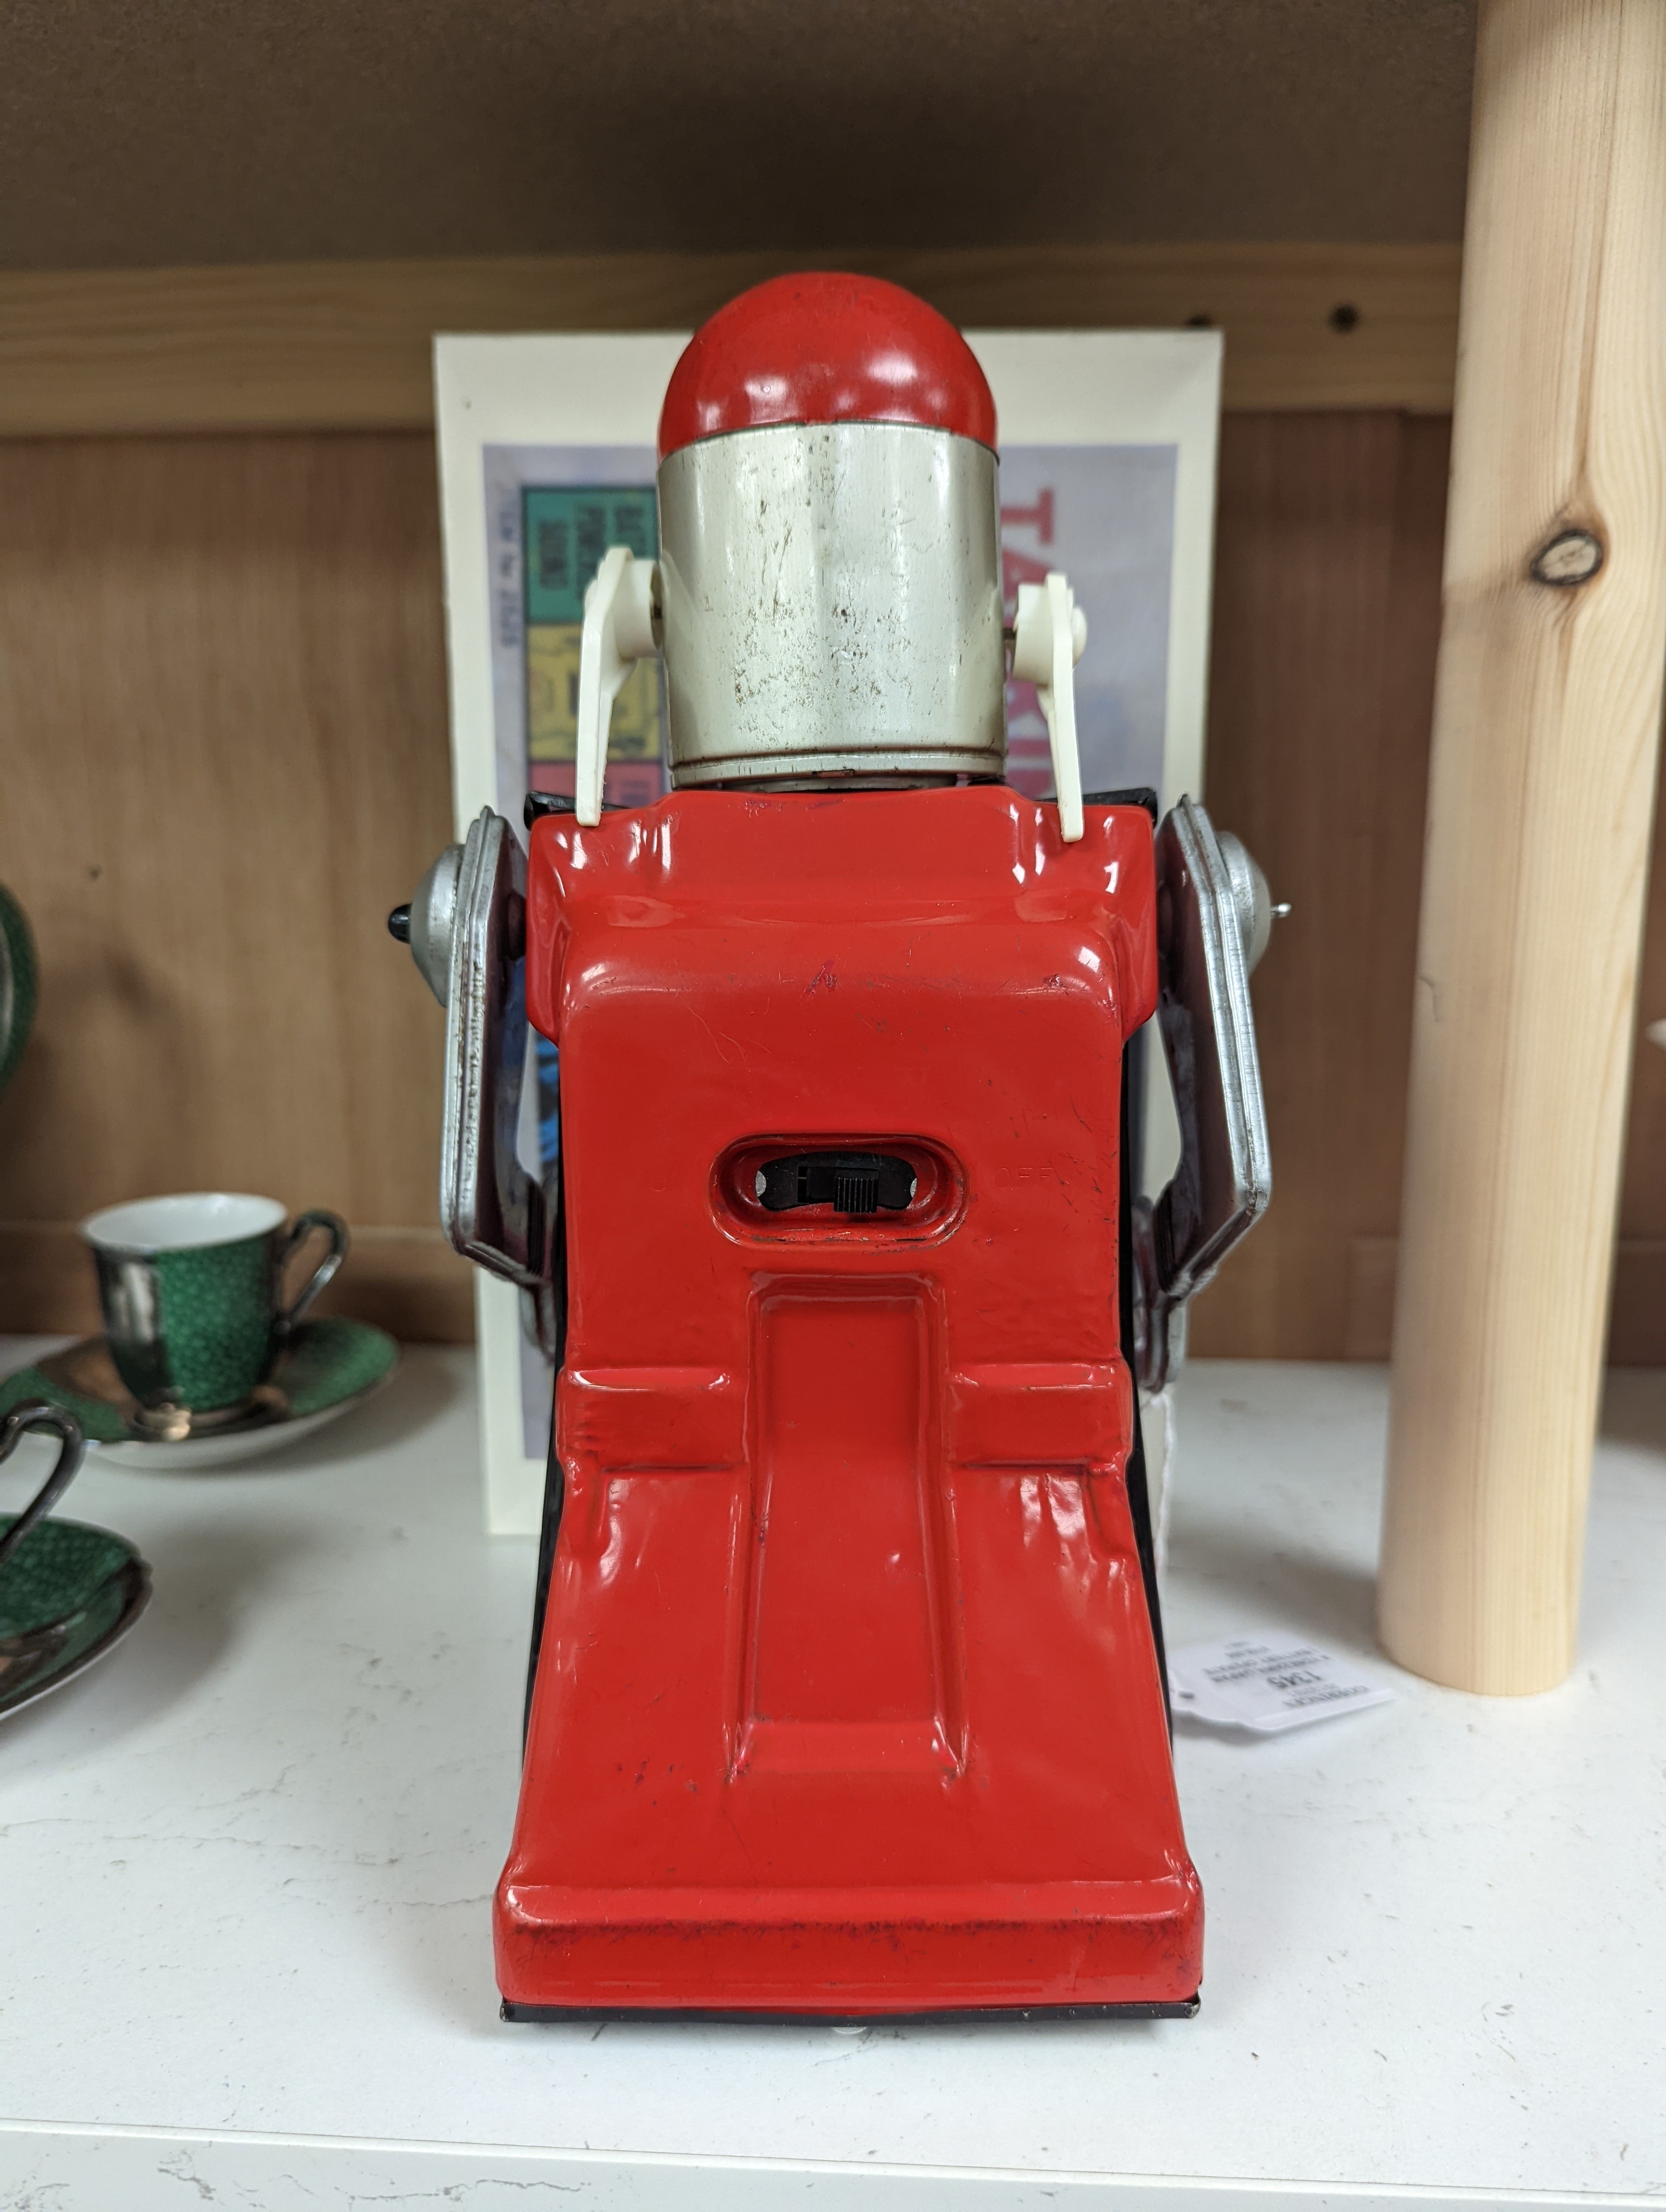 A Yonezawa (Japan) battery operated talking robot (replacement box) robot 26cm